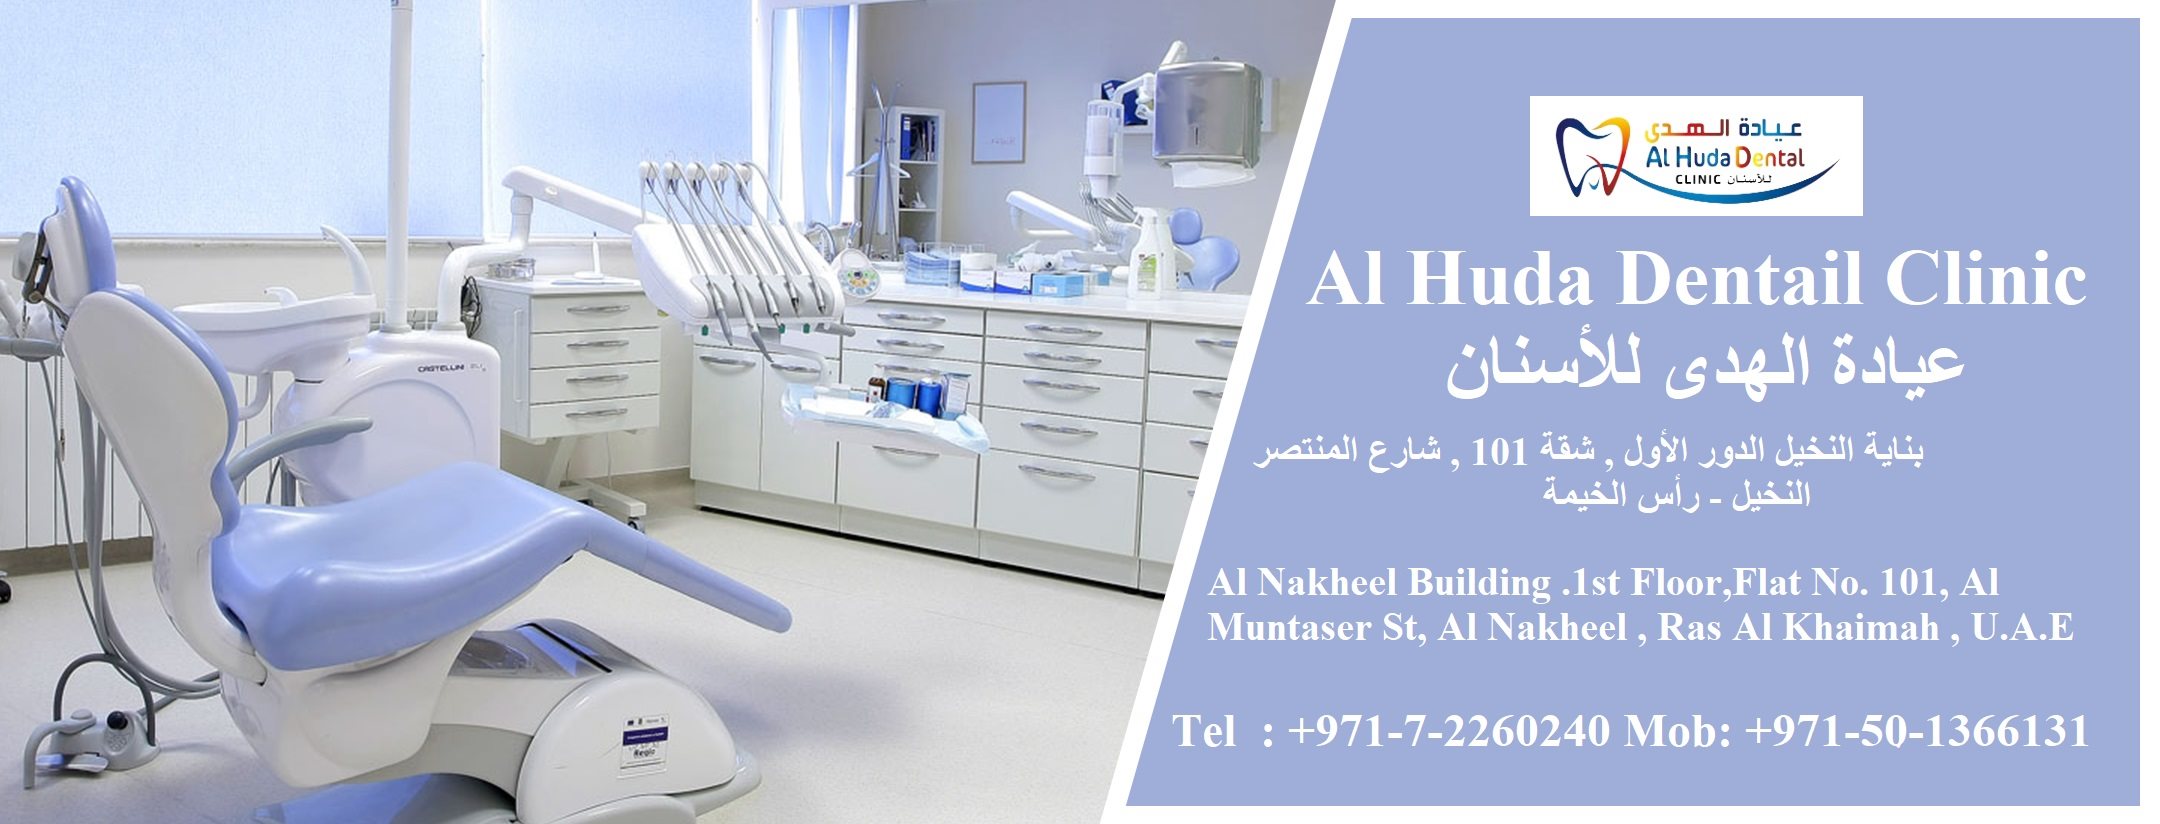 Al Huda Dental Clinic